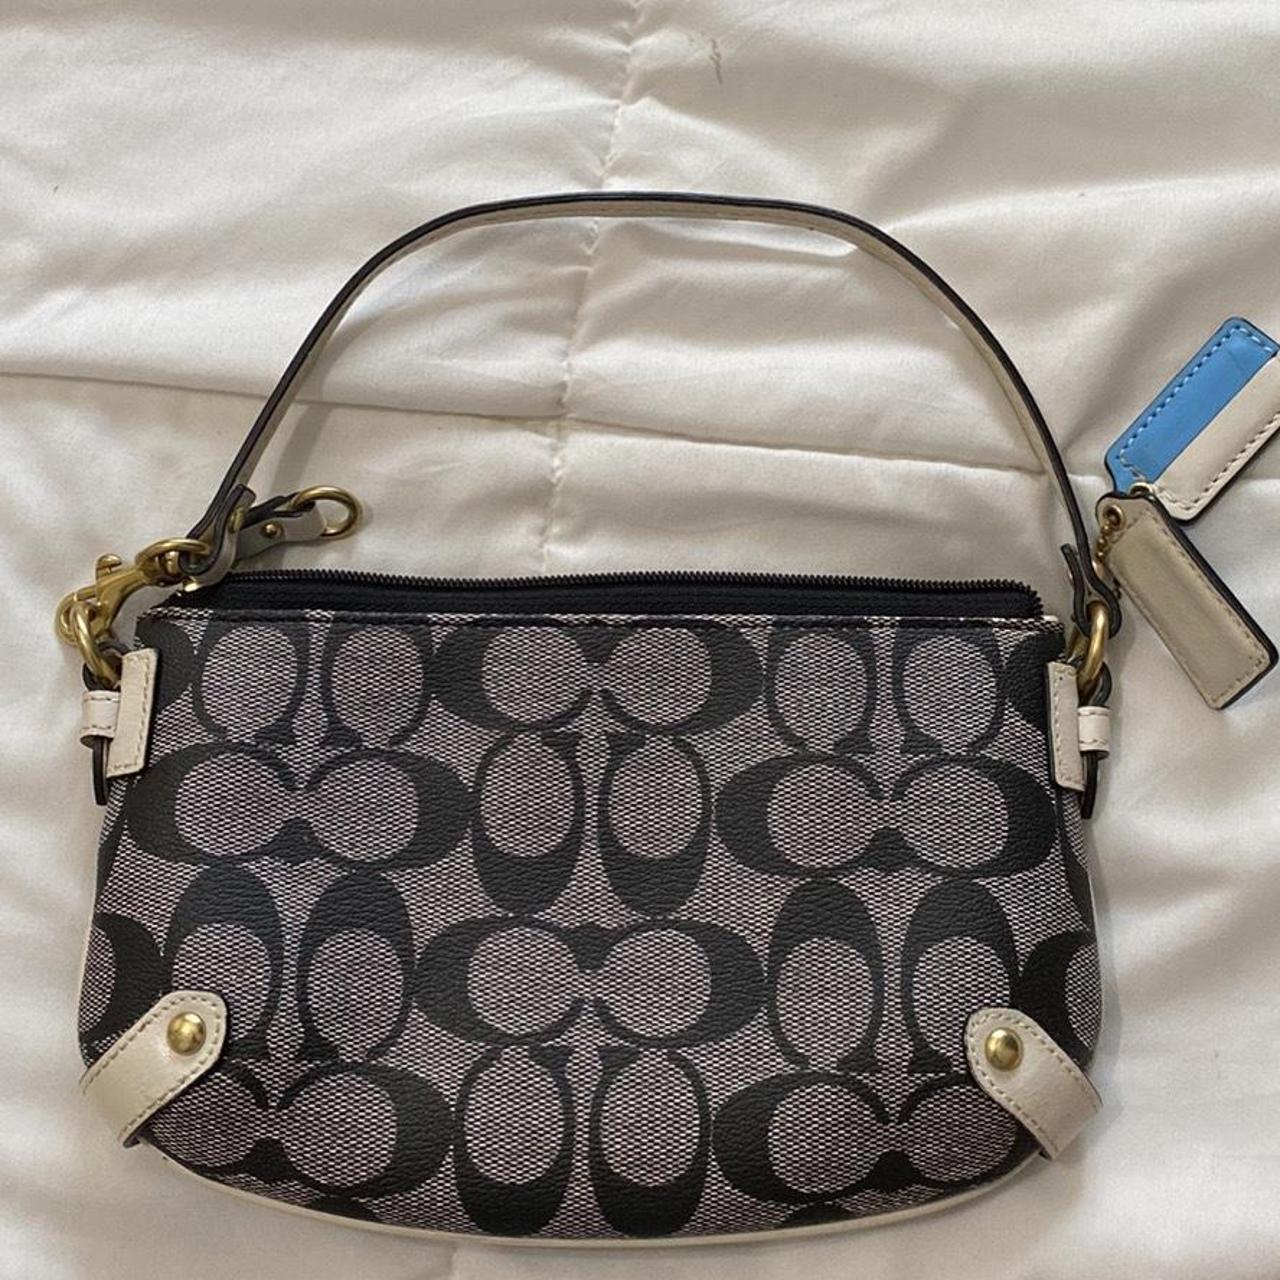 used small coach handbags - Gem